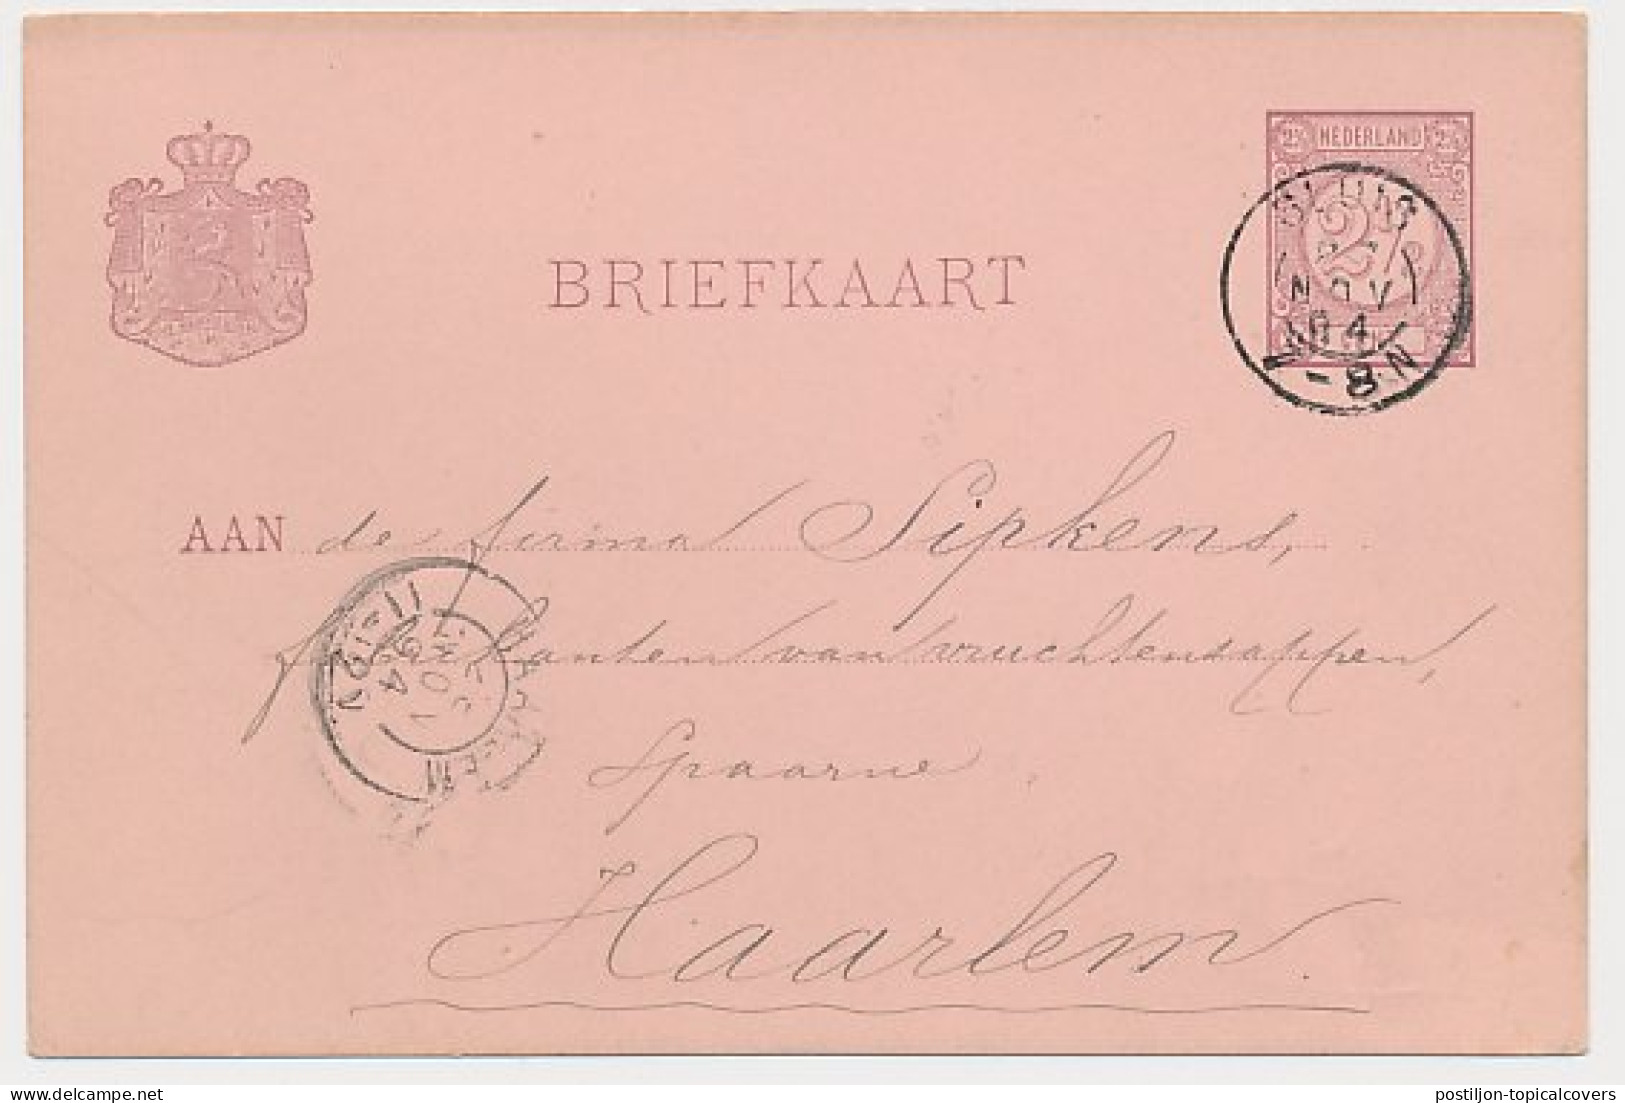 Kleinrondstempel Sluis 1894 - Unclassified